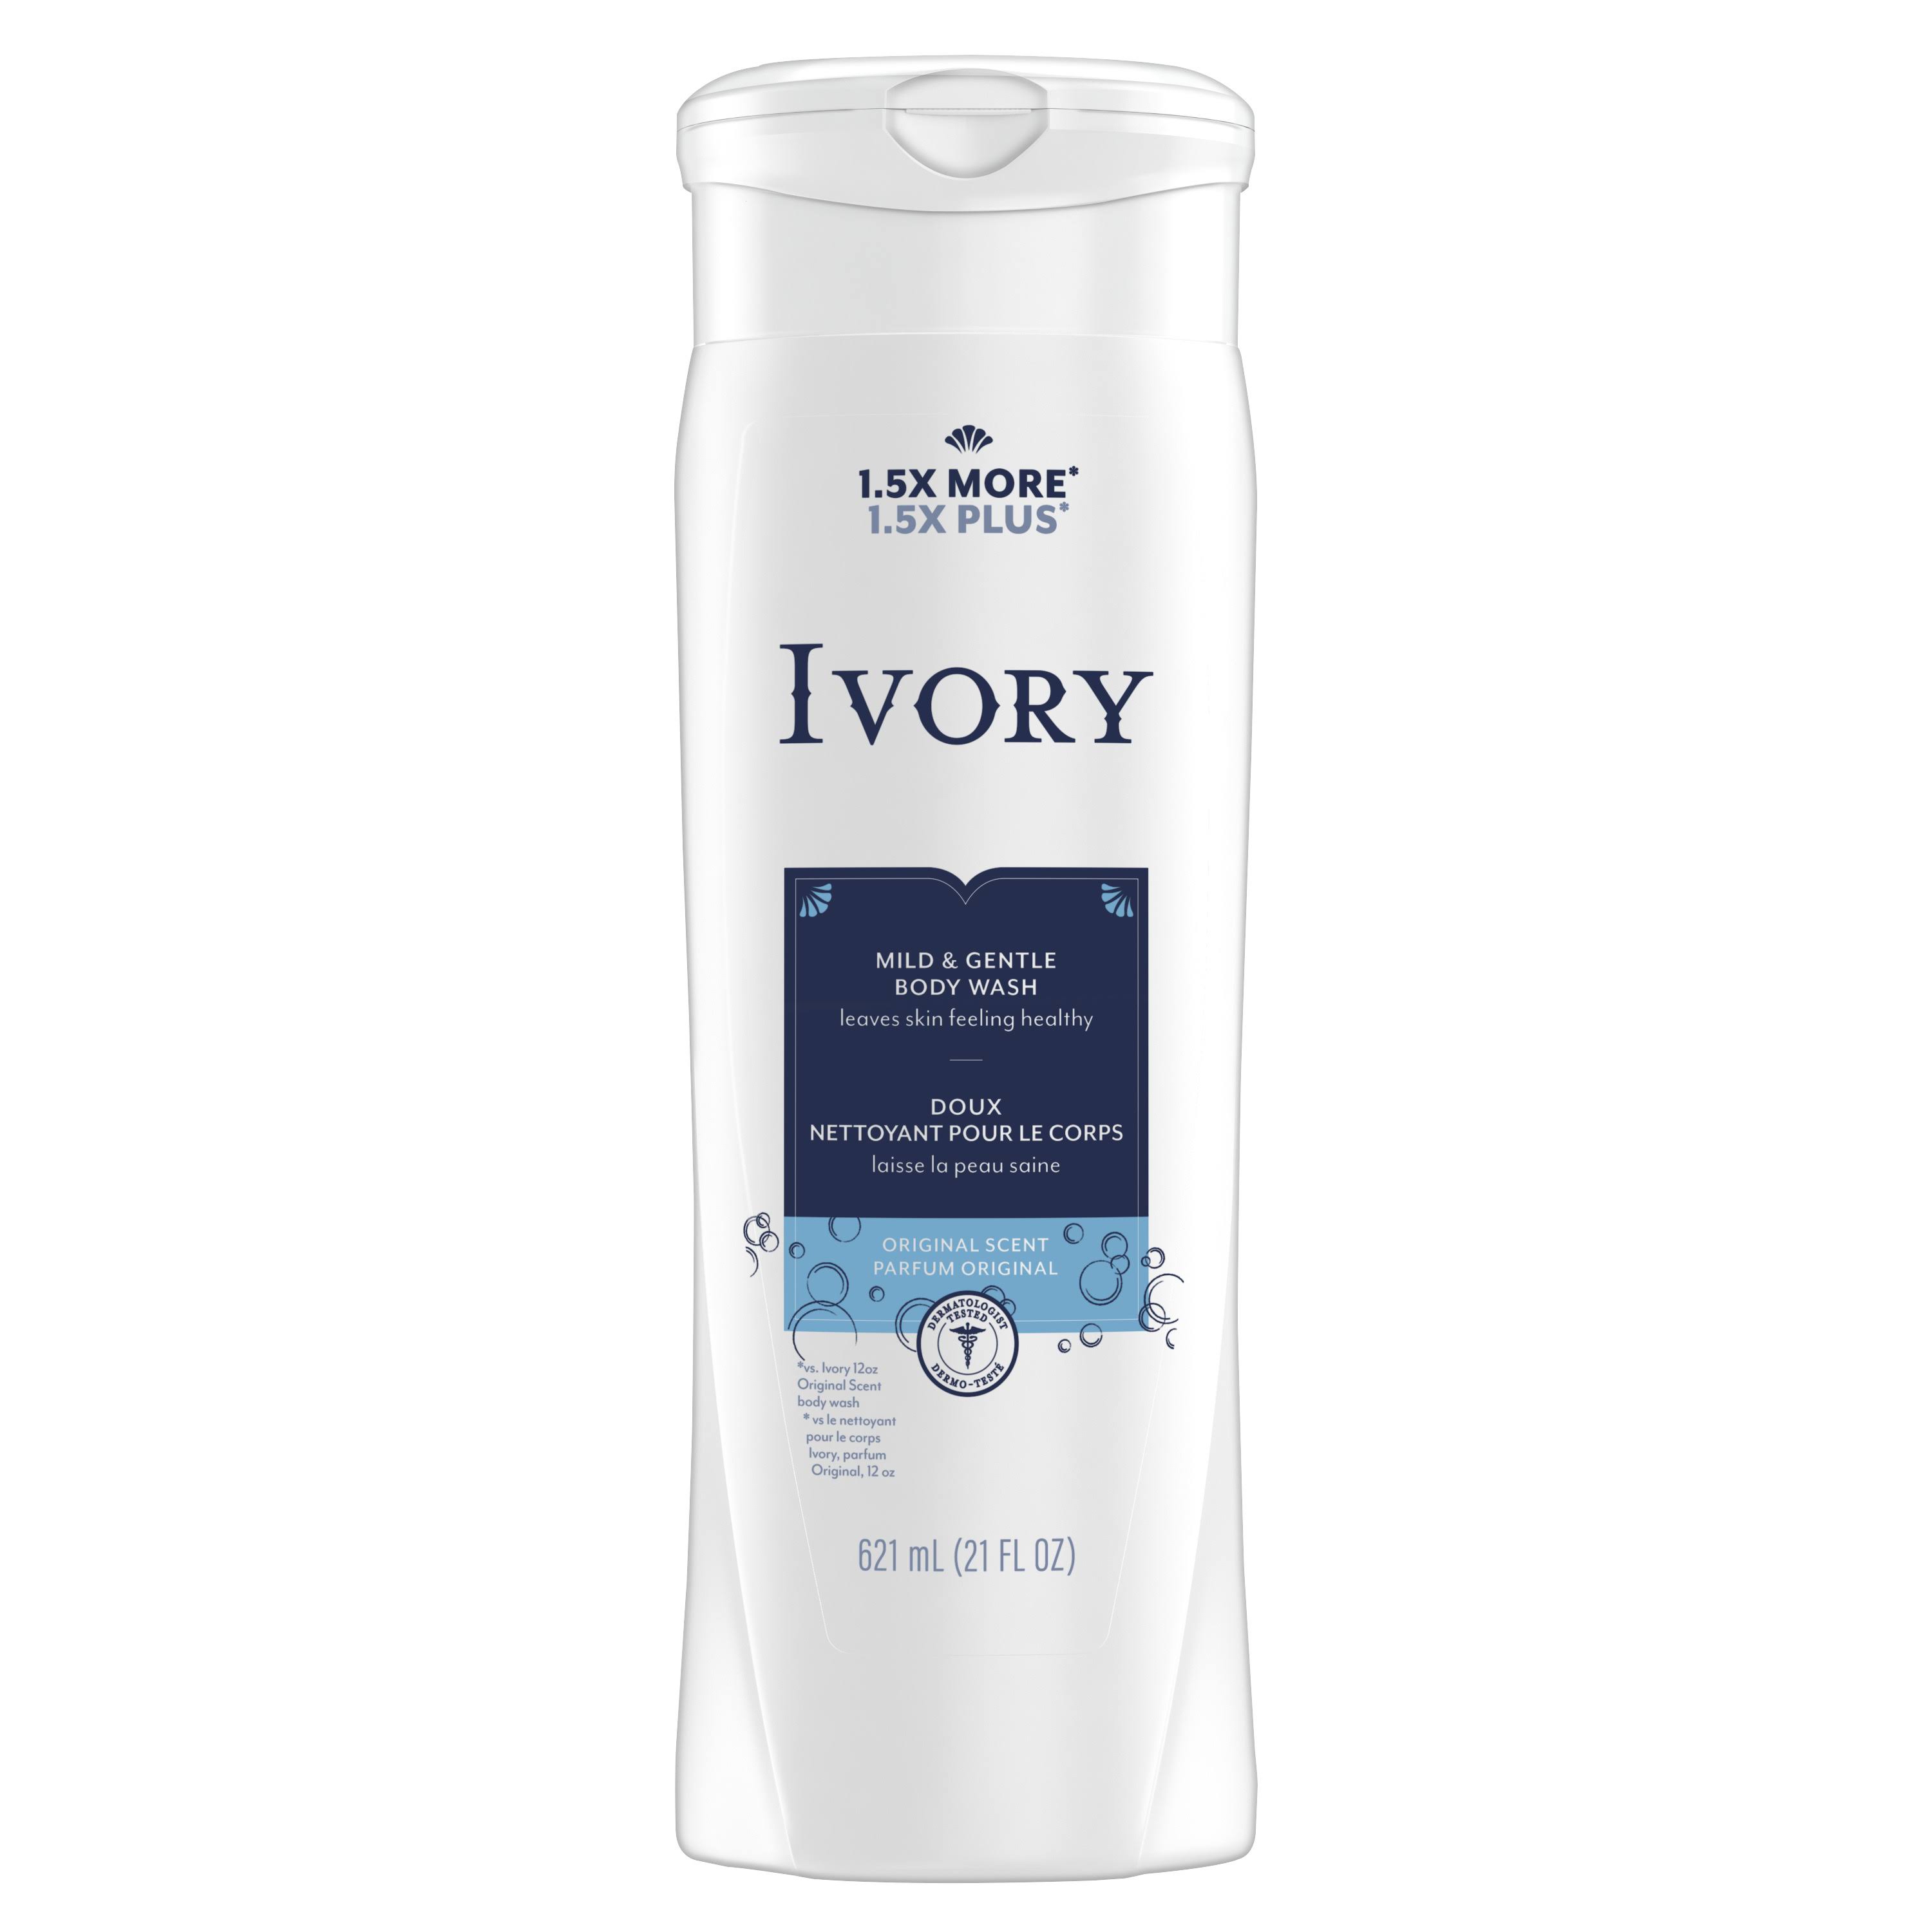 Ivory Scented Body Wash - Original, 621ml